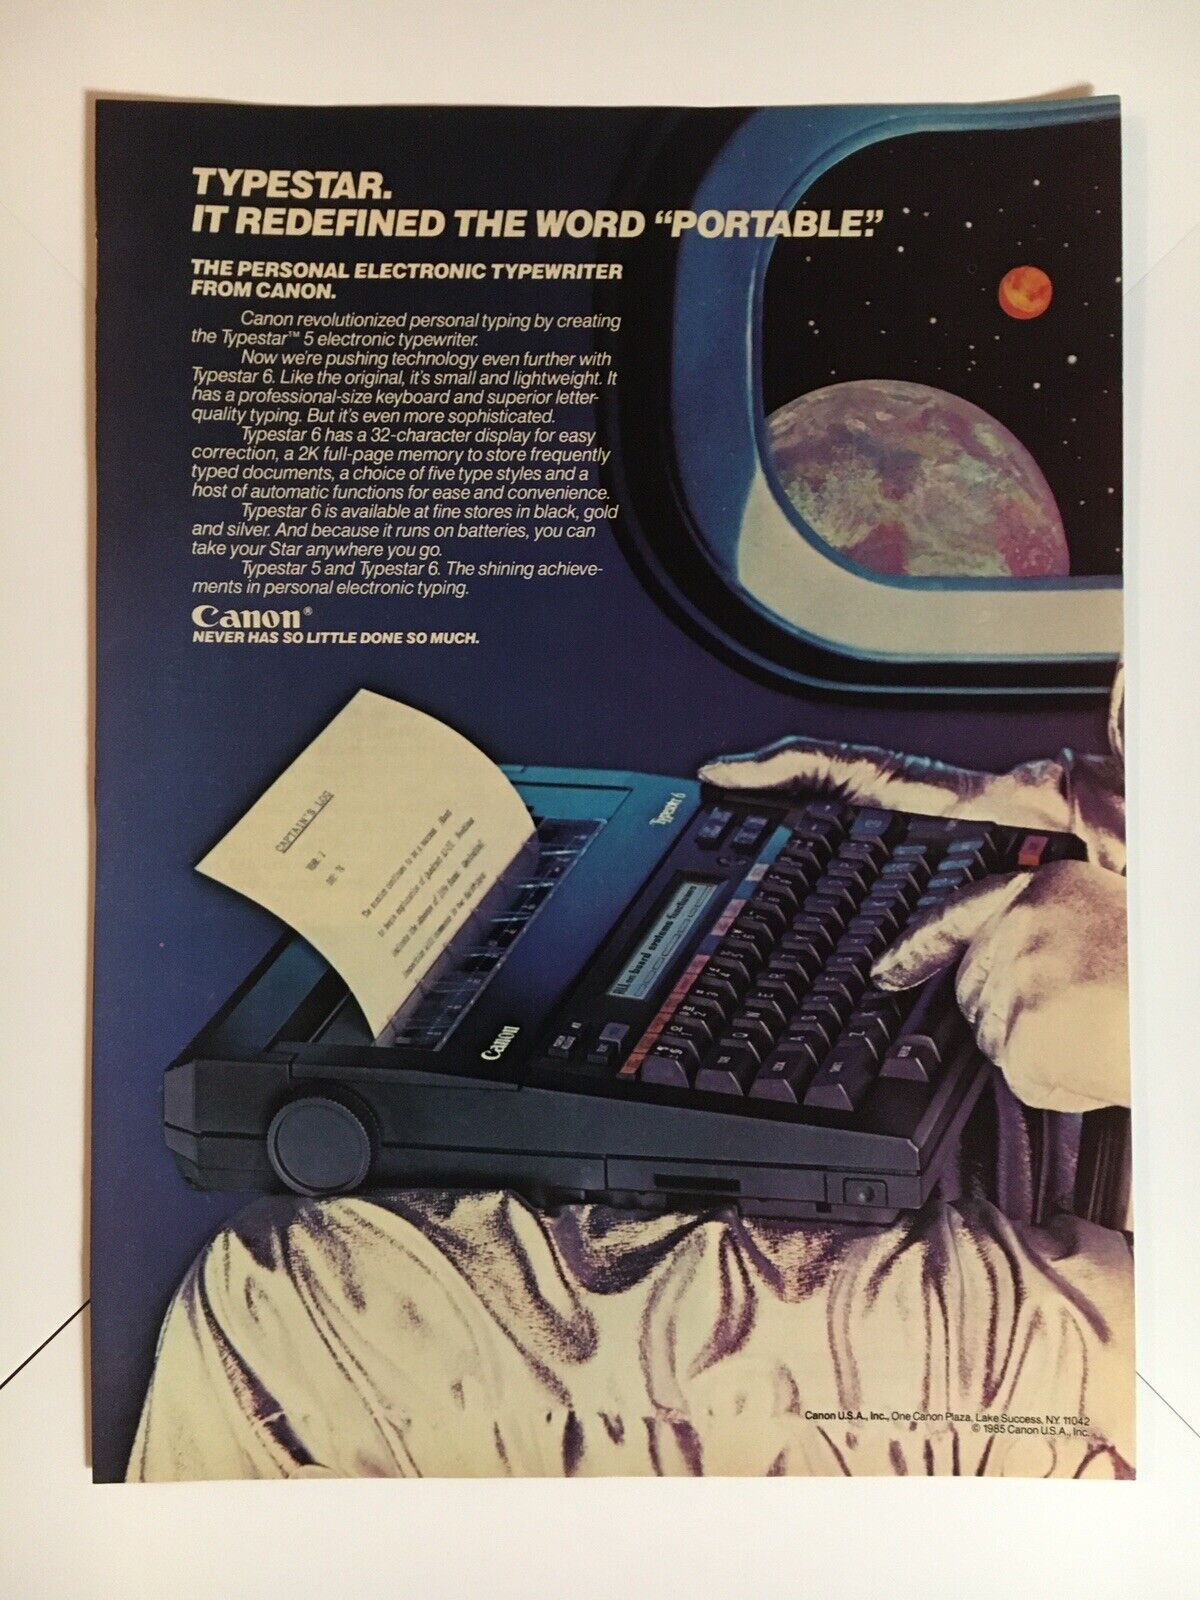 Canon Typestar Typewriter Astronaut 1985 Vintage Print Ad 8x11 Inches Wall Decor